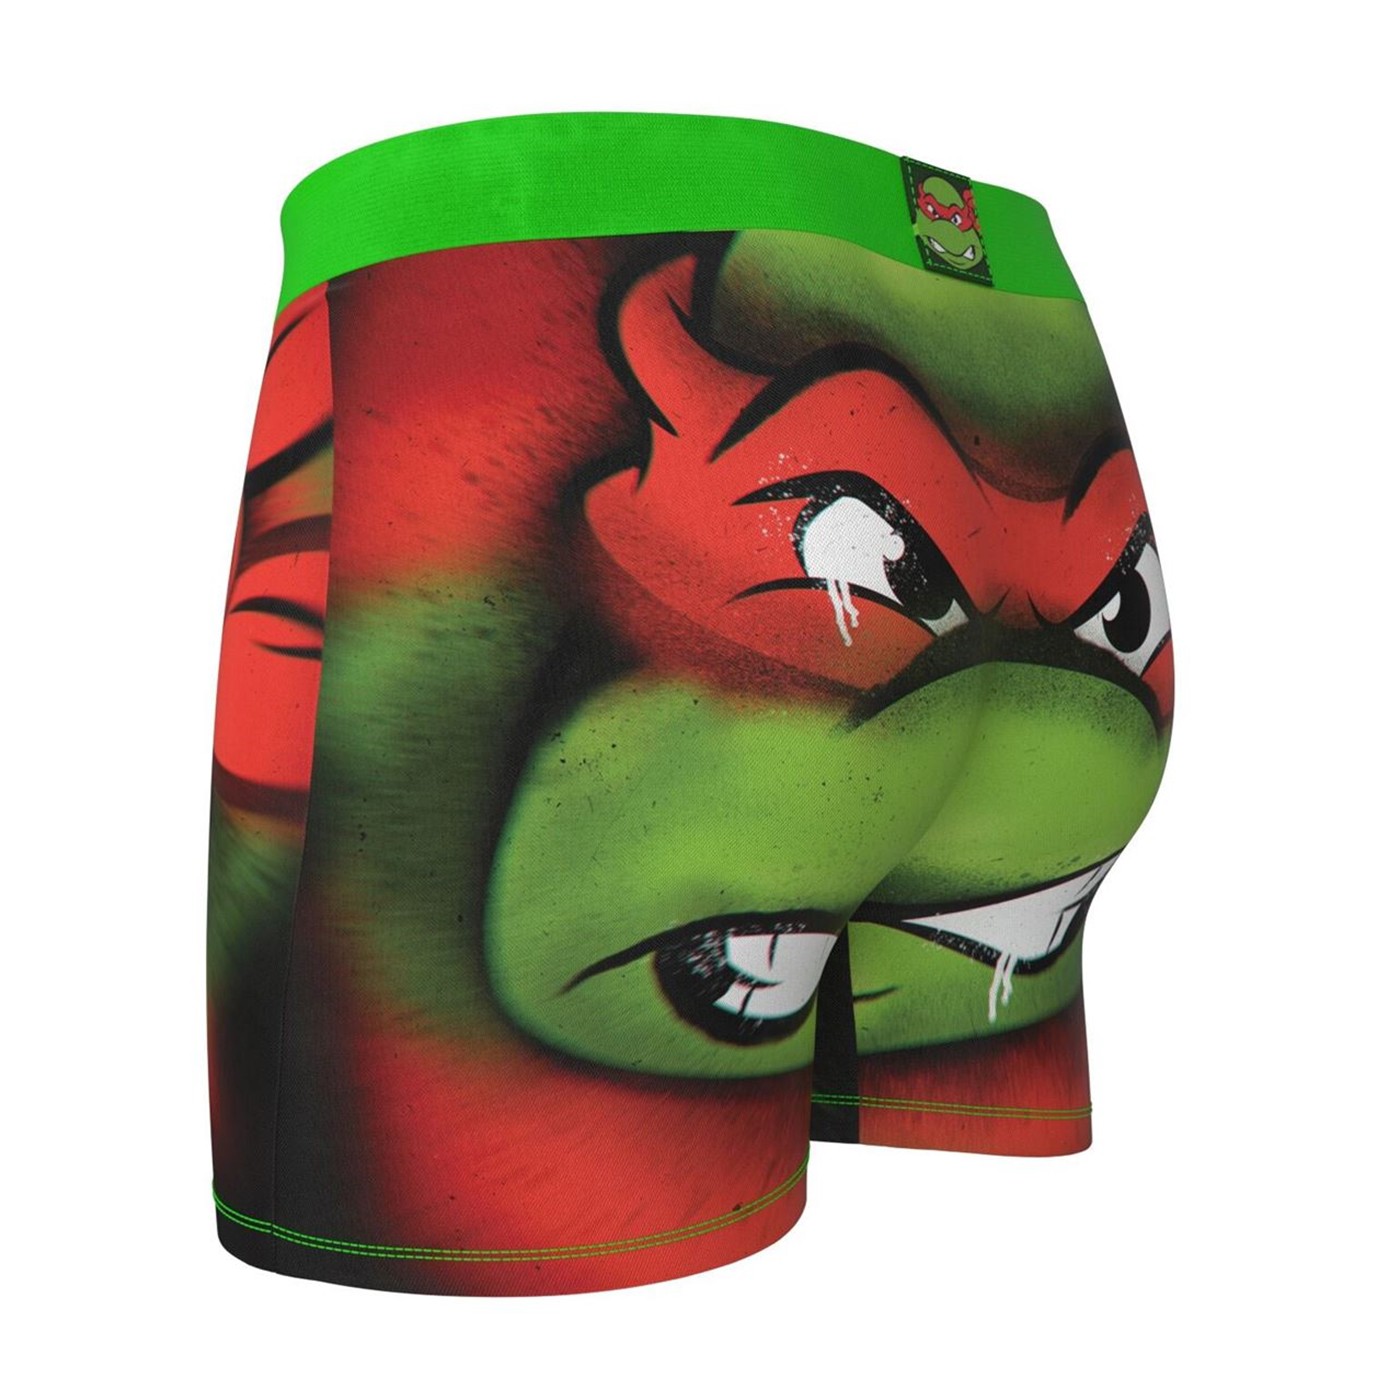 Teenage Mutant Ninja Turtles' Raphael Men's Underwear Boxer Briefs